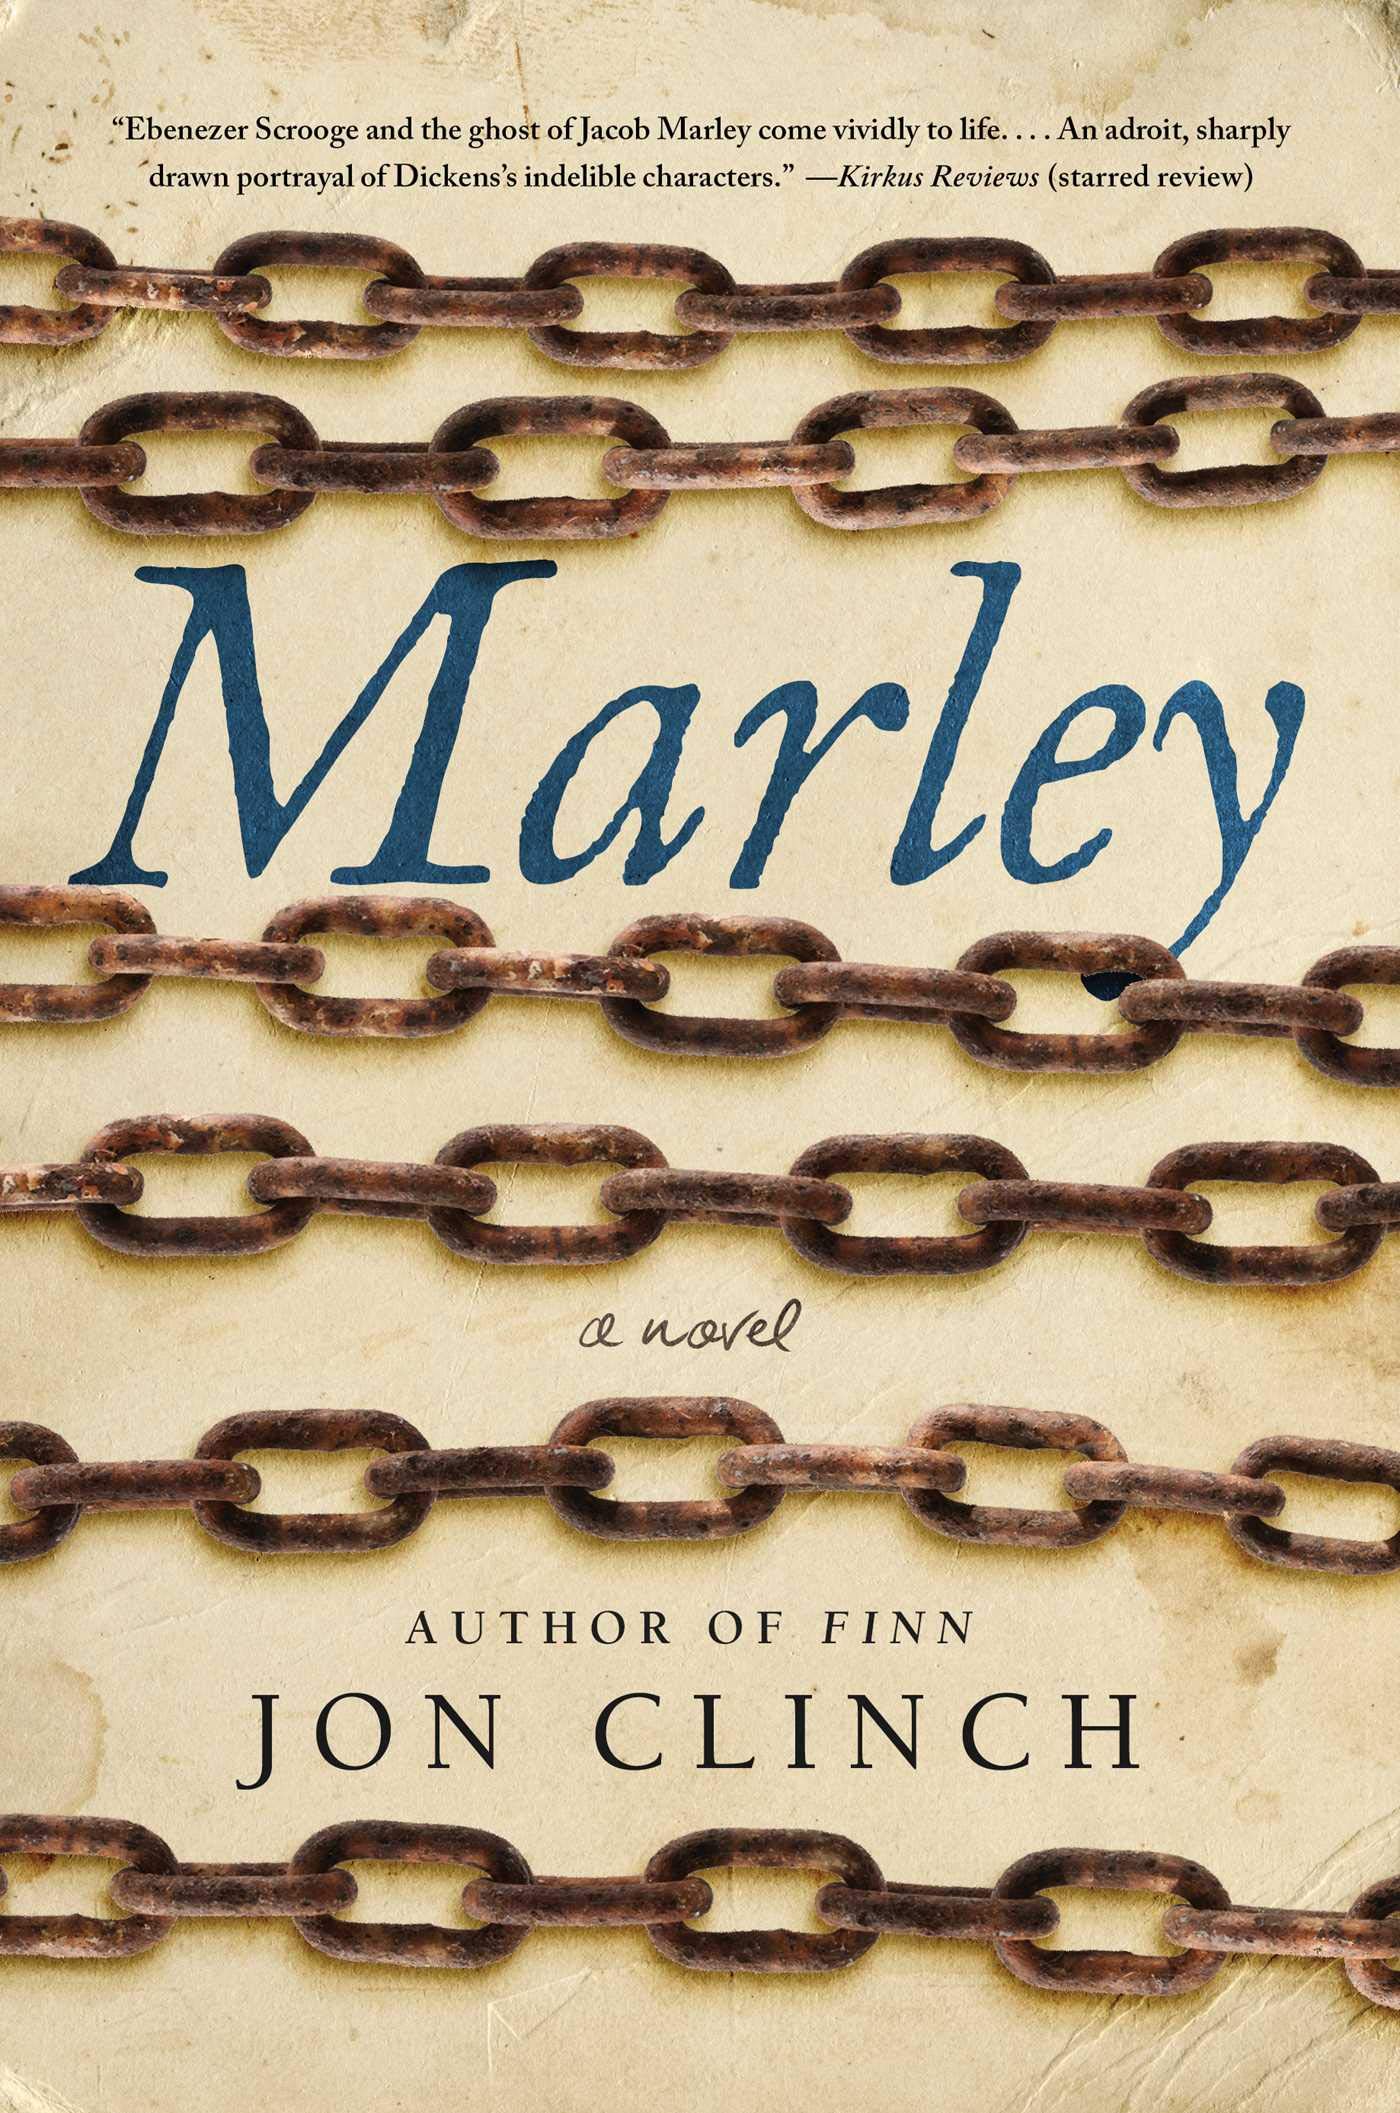 Marley: A Novel by Jon Clinch